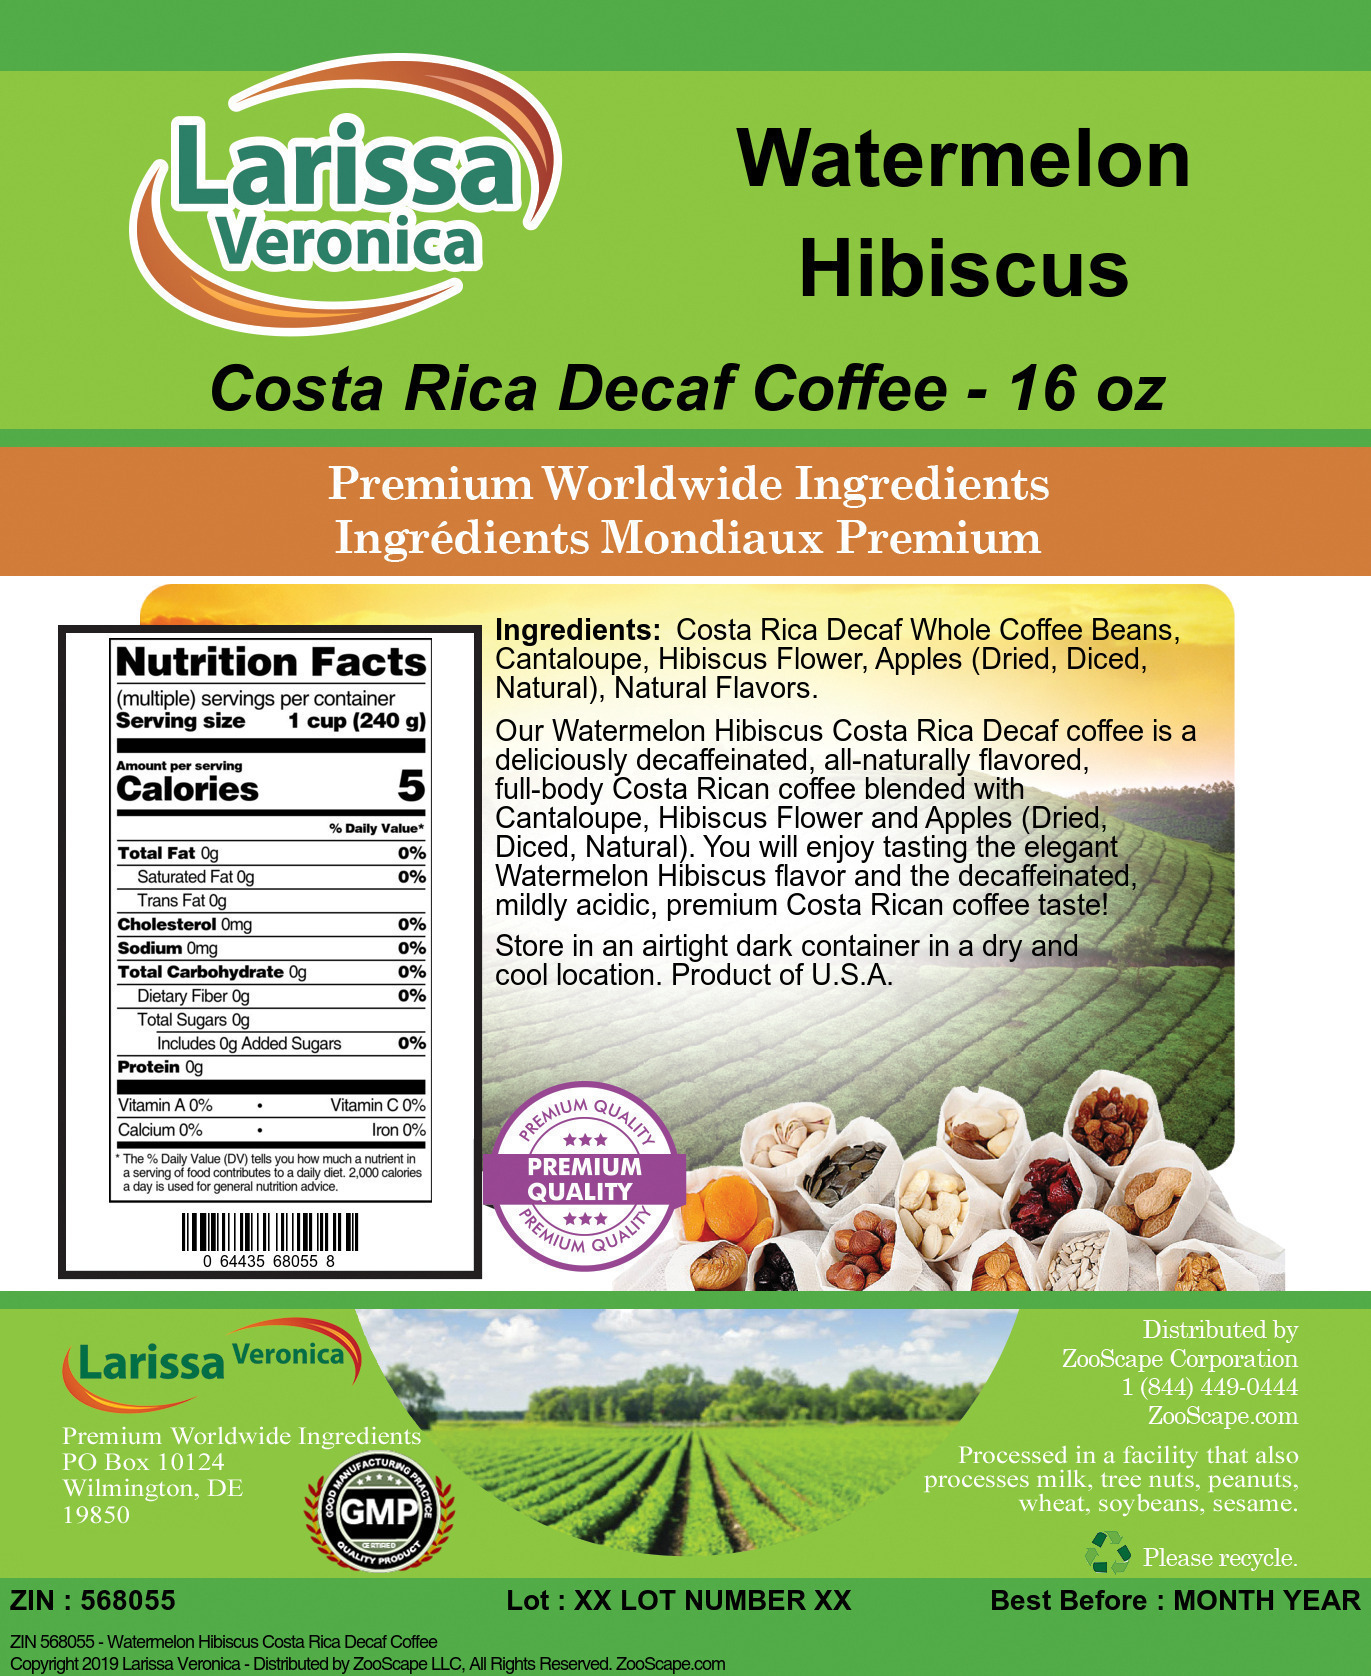 Watermelon Hibiscus Costa Rica Decaf Coffee - Label